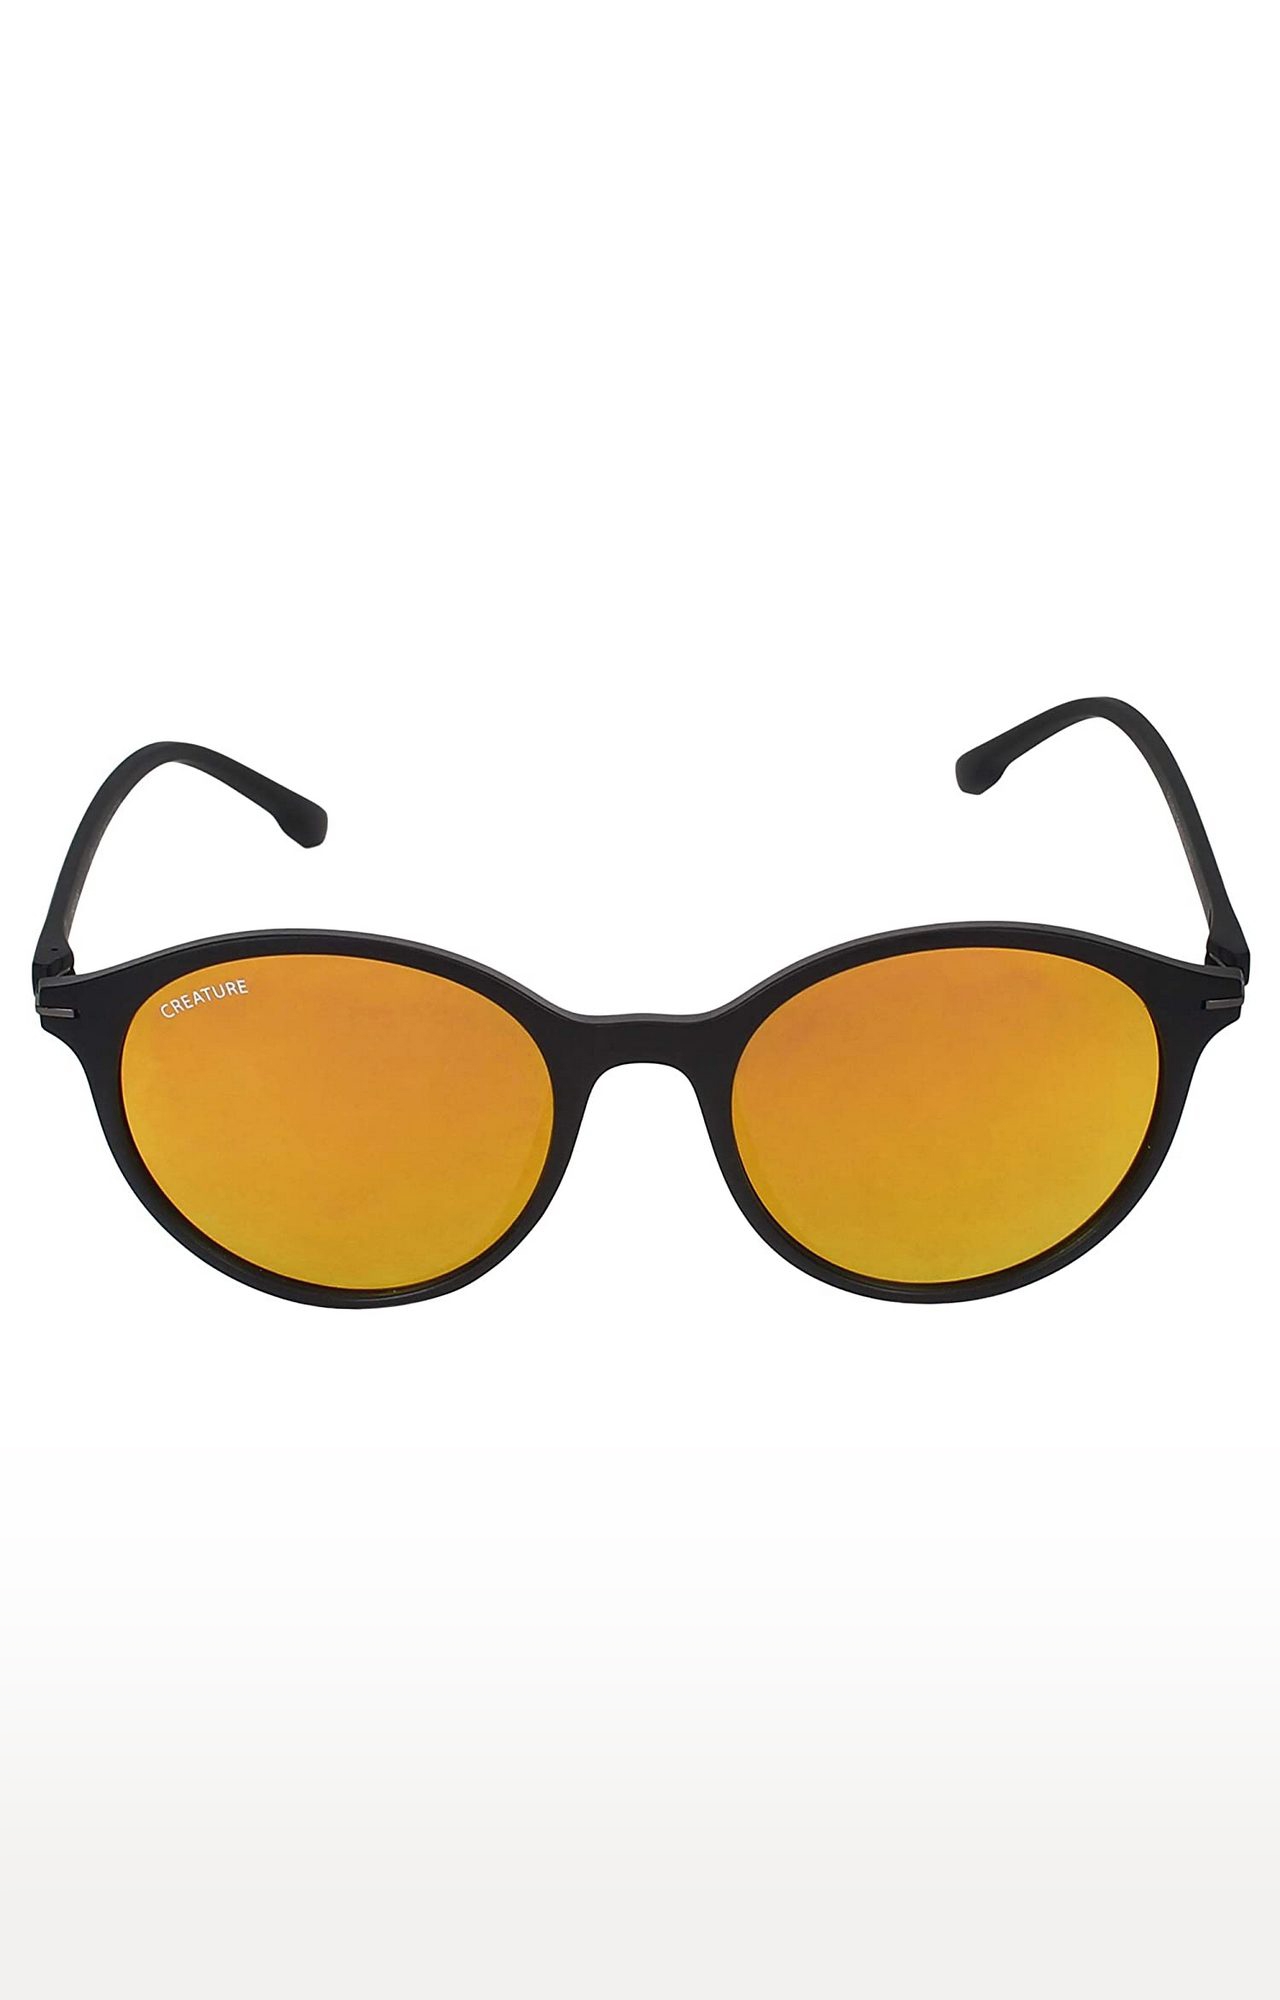 CREATURE | CREATURE Matt Finish Club Master Round UV Protected Unisex Sunglasses (Lens-Yellow|Frame-Black) 1